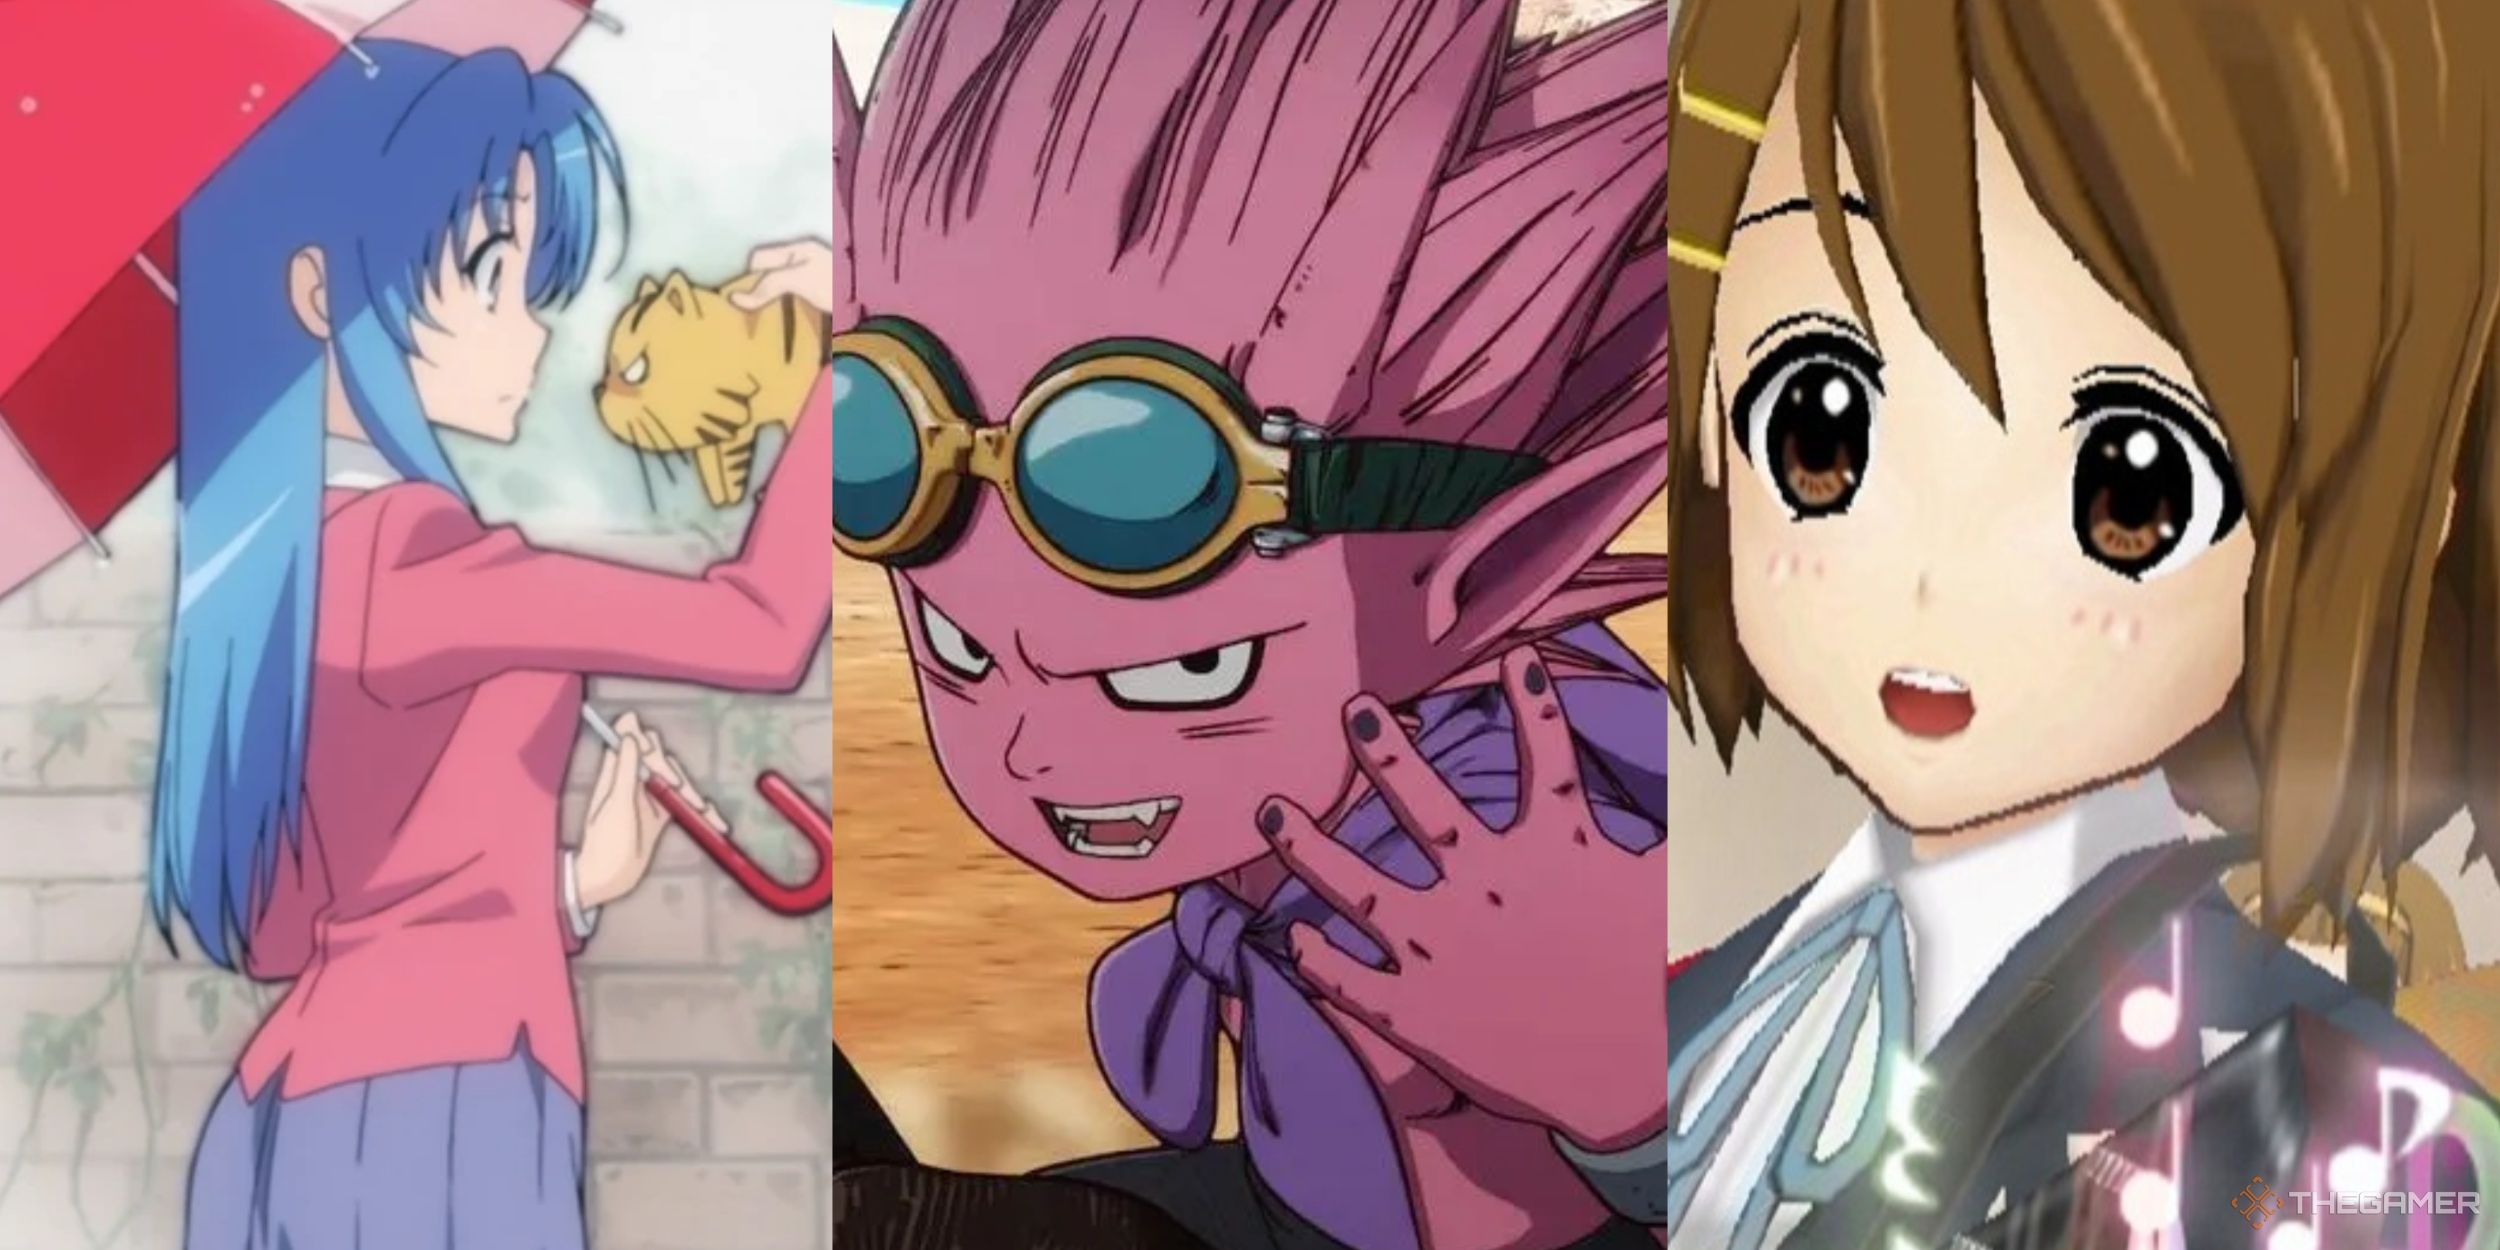 A collage of images showcasing Ami Kawashima from Toradora!, Yui Hirasawa from K-On!, and Beelzebub from Sand Land